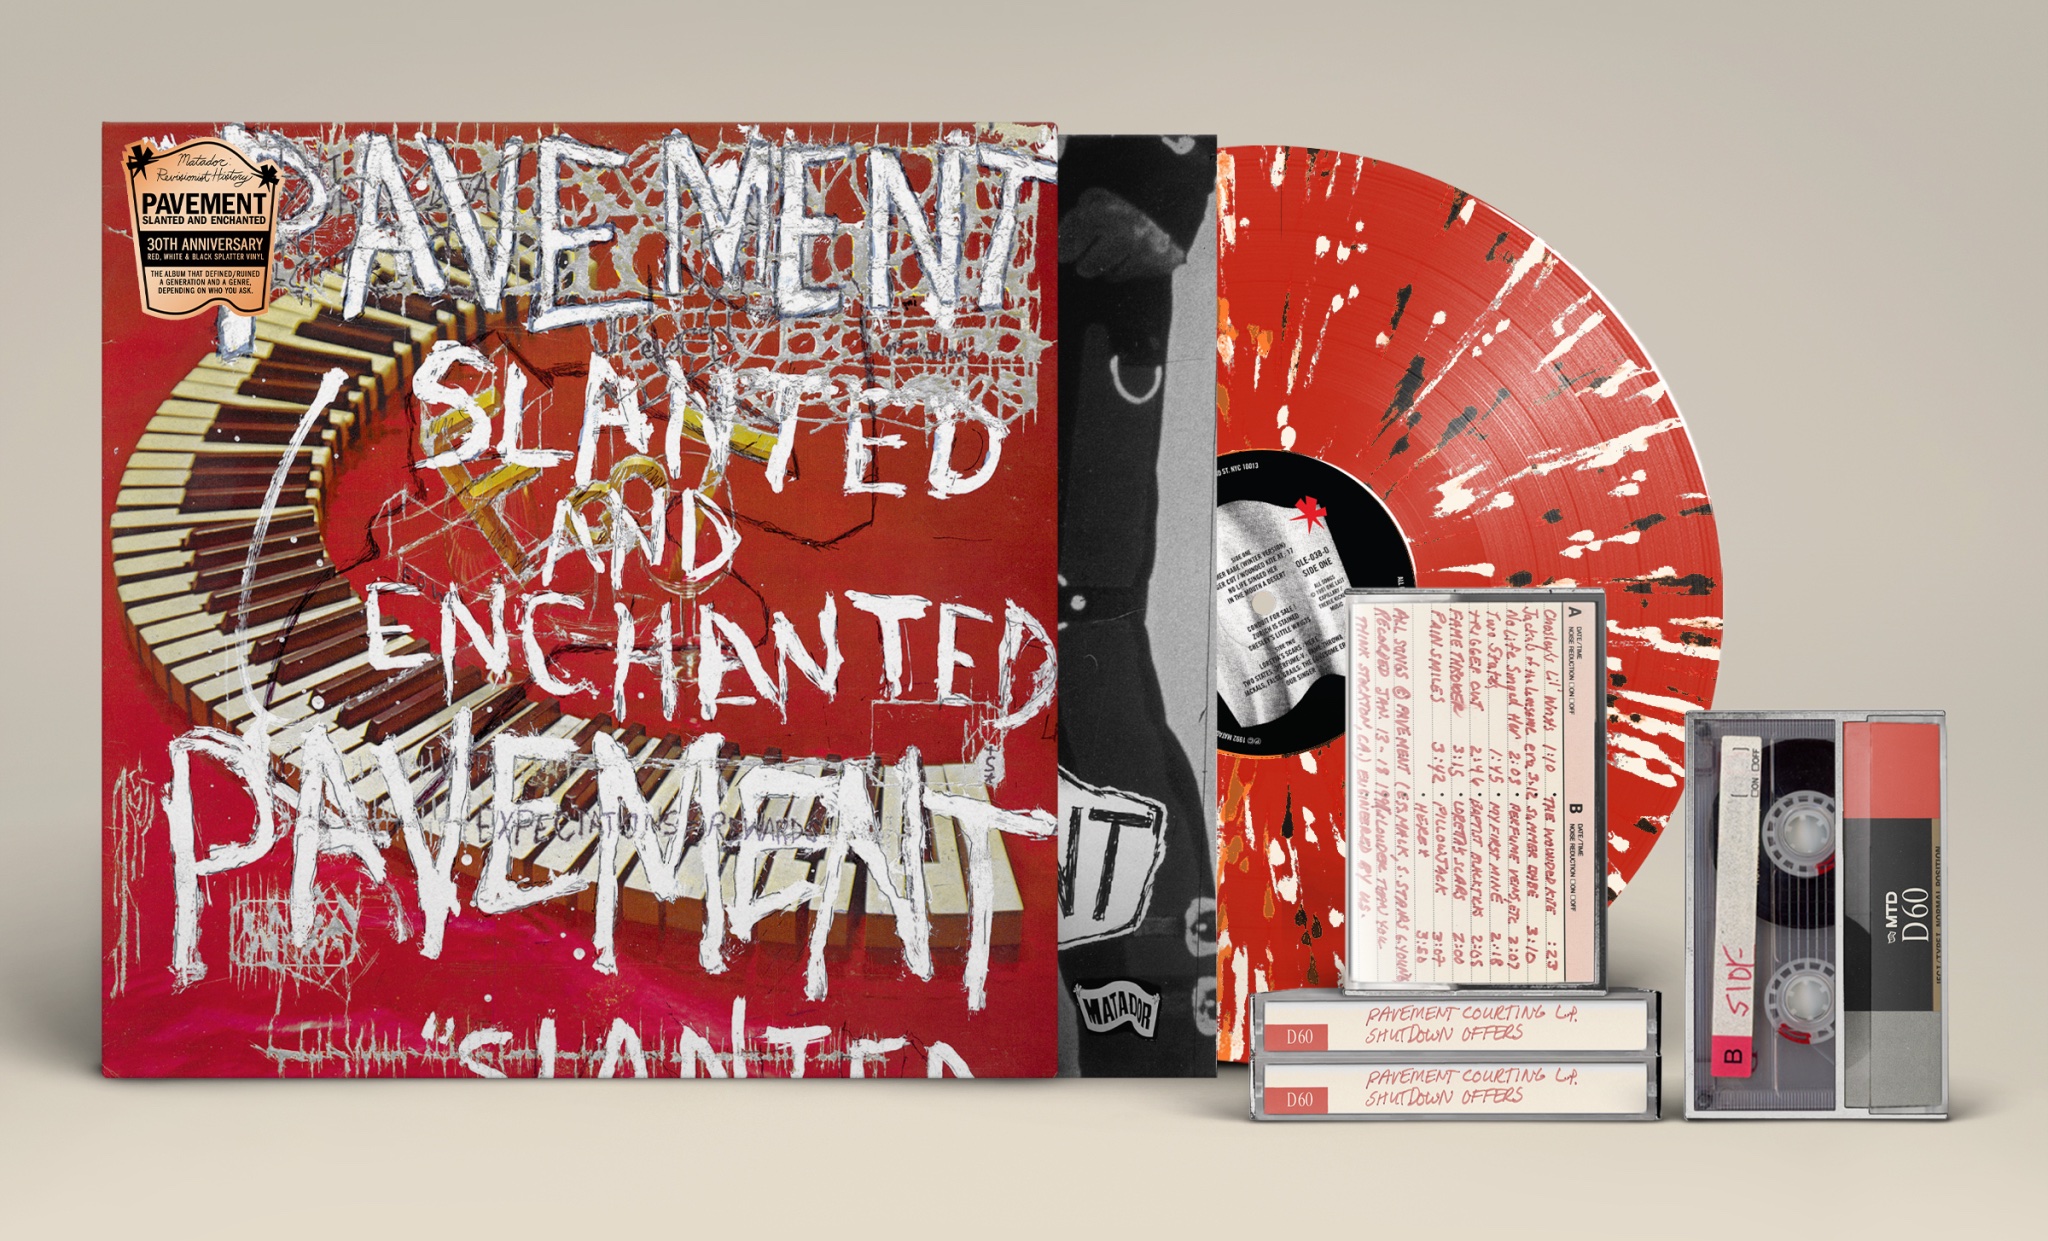 Slanted And Enchanted 30th Anniversary Vinyl